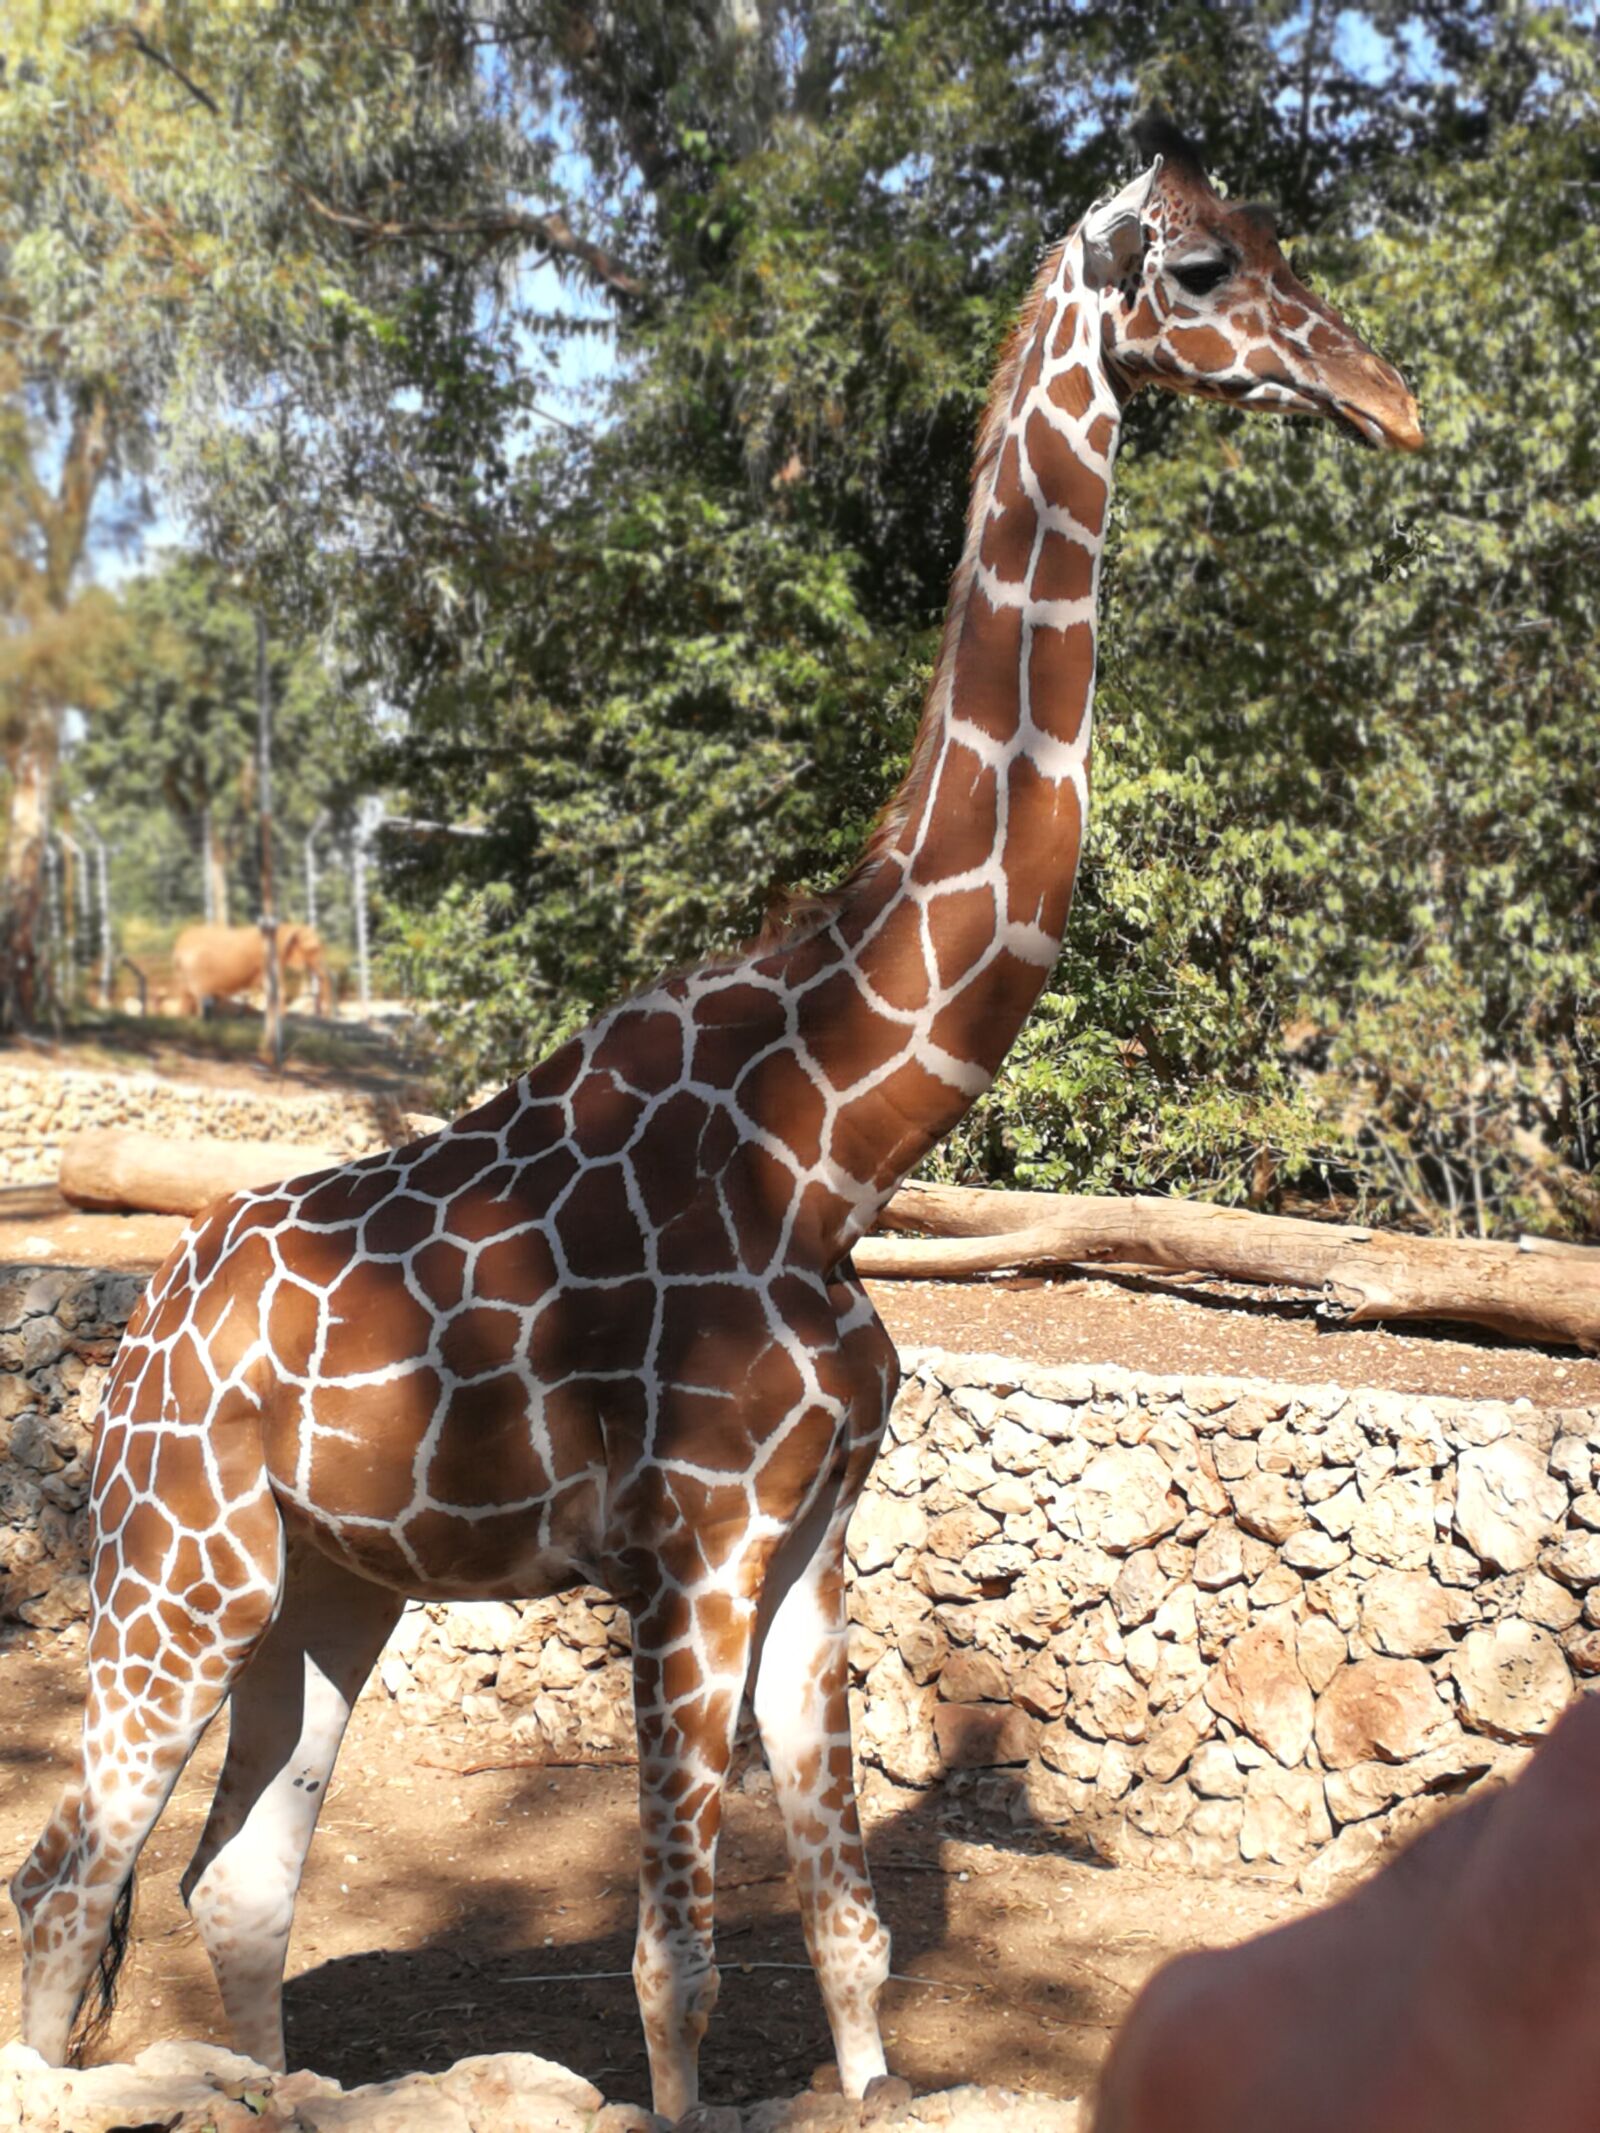 HUAWEI P10 sample photo. Giraffe, giraffes, zoo photography